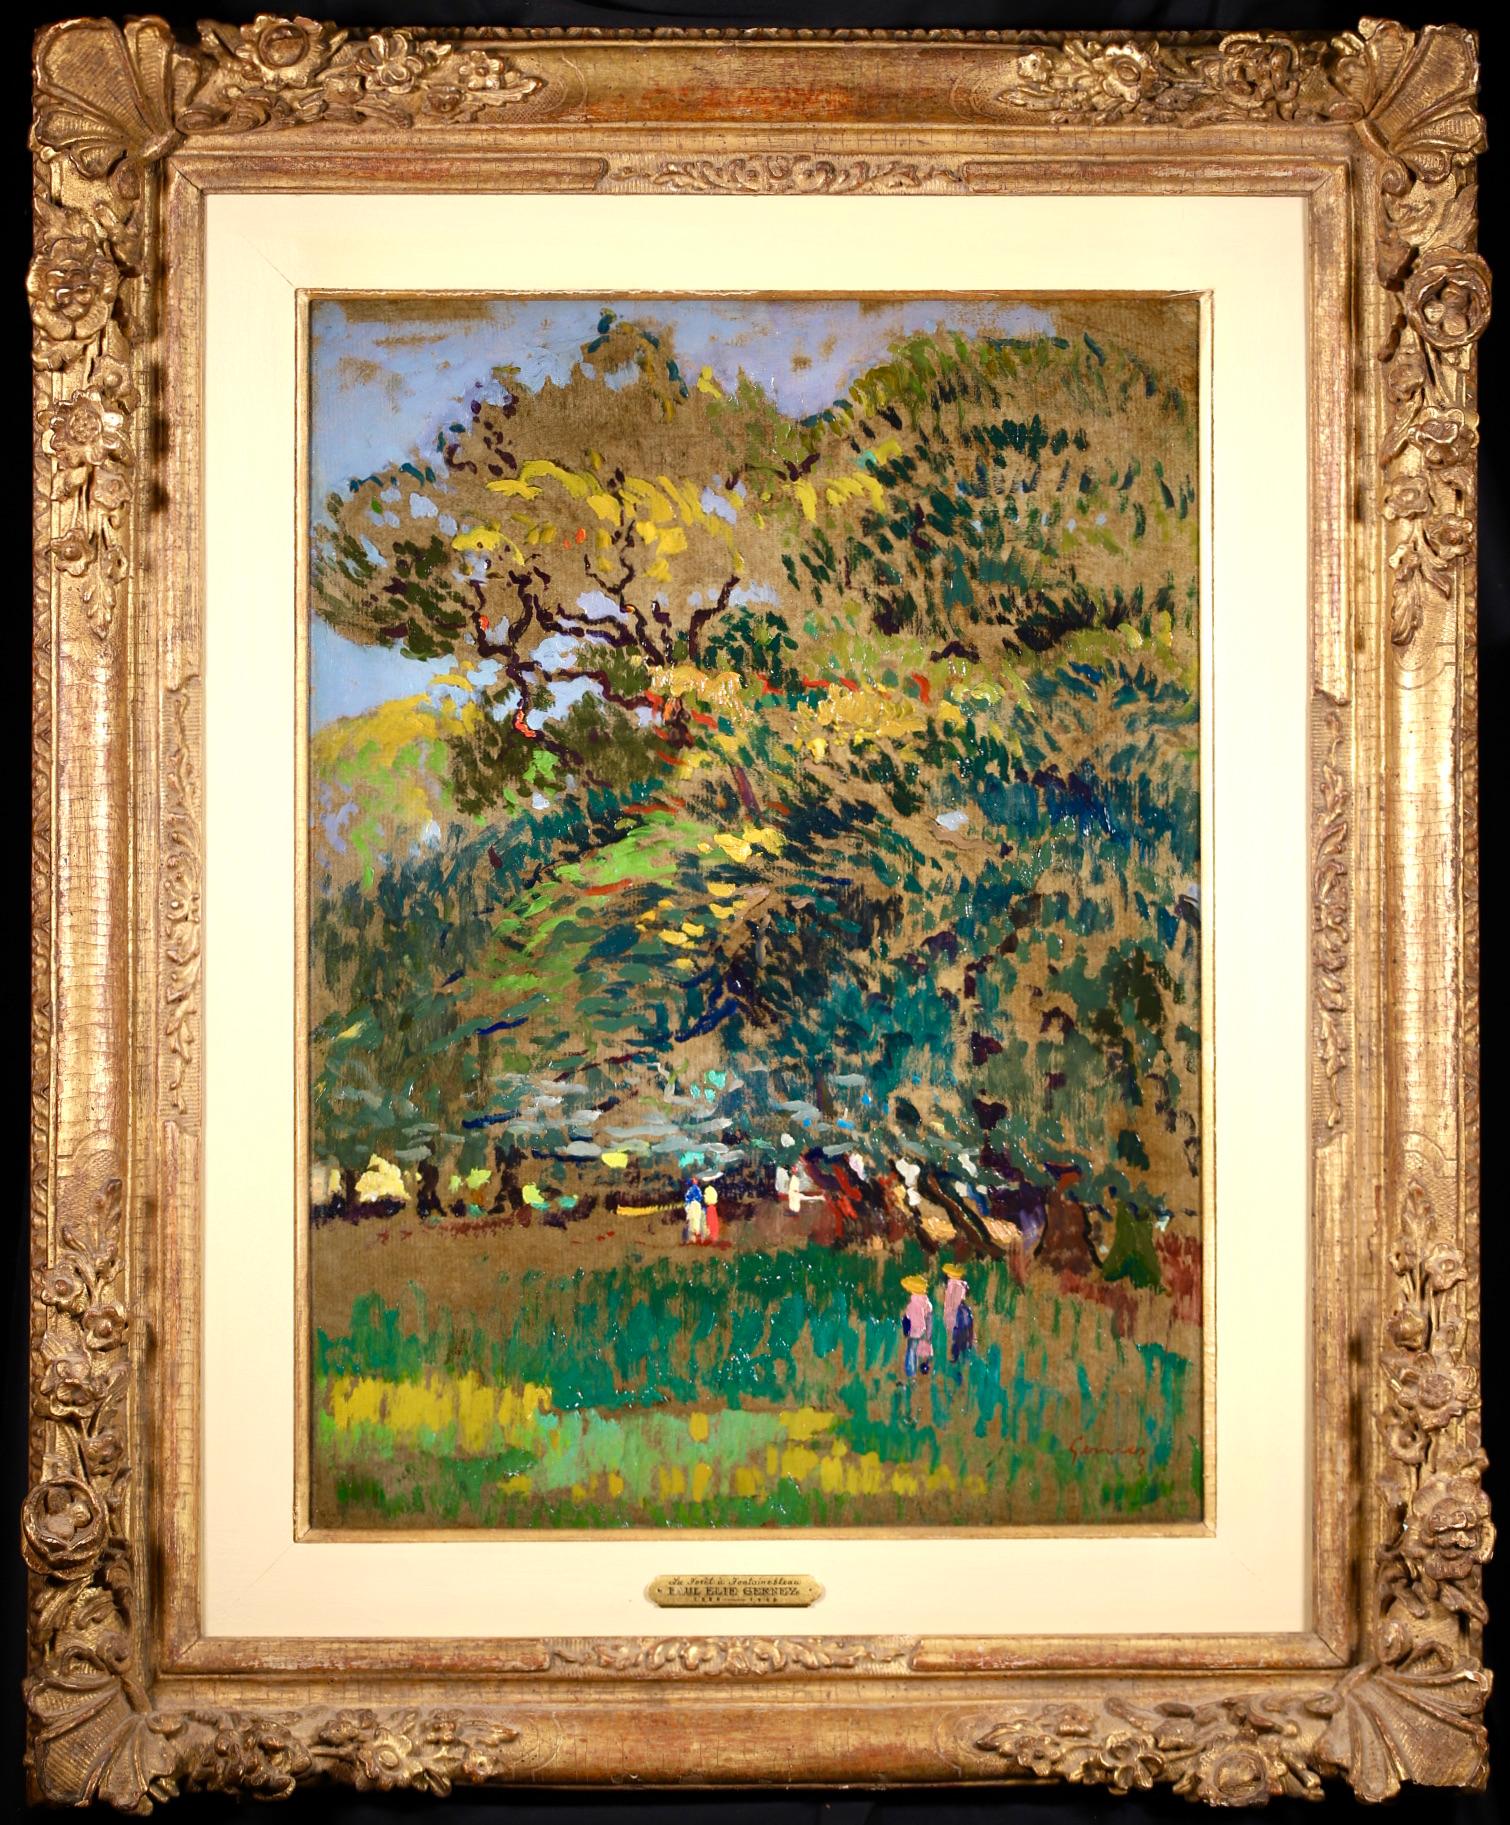 Paul-Élie Gernez Figurative Painting - Figures in the Forest - Post Impressionist Landscape Oil by Paul Gernez